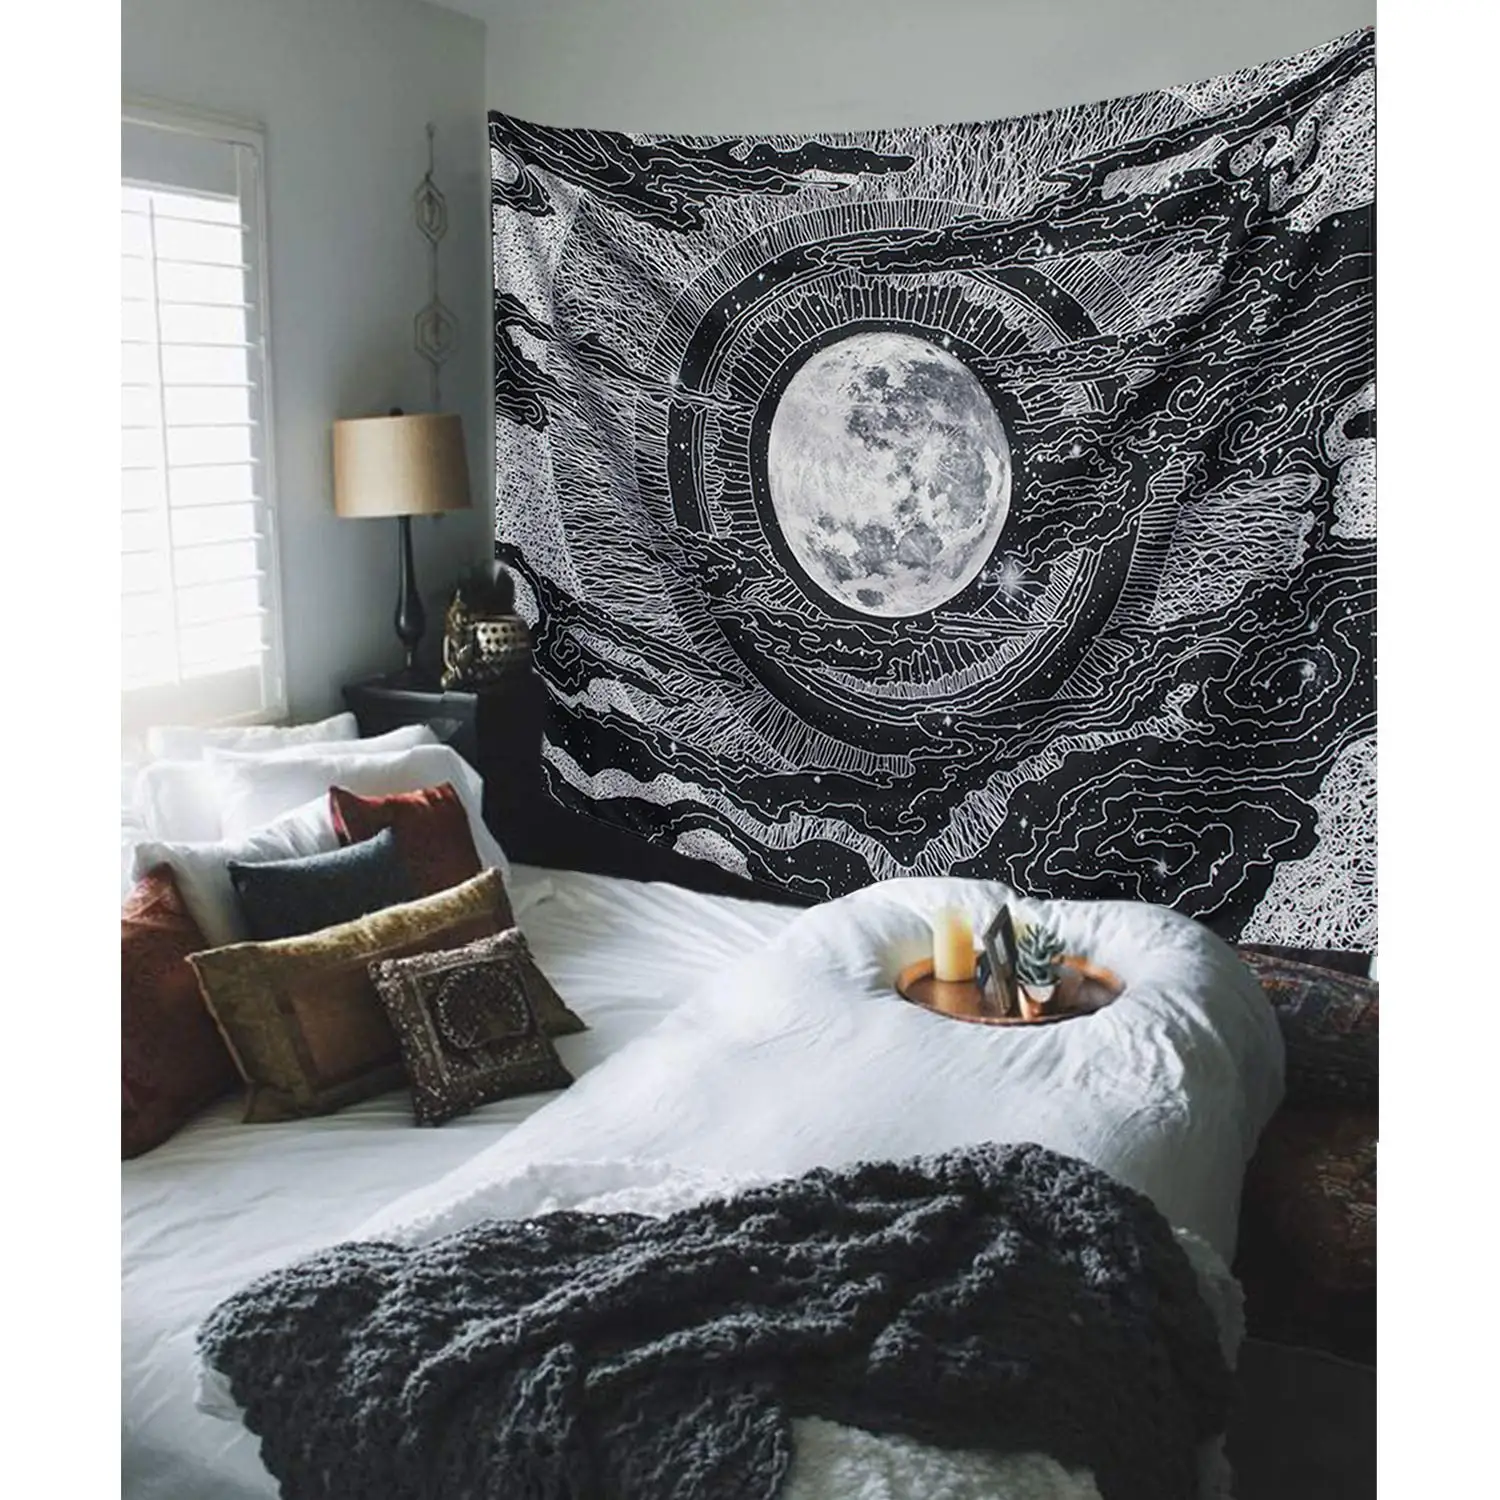 Dremisland Moon and Star Wall Tapestry Mandala Wall Hanging Tarot Tapestries Black & White Wall Blanket Wall Art for Living Room Bedroom Decor 58 X 79 Moon, L / 148 X 200 cm